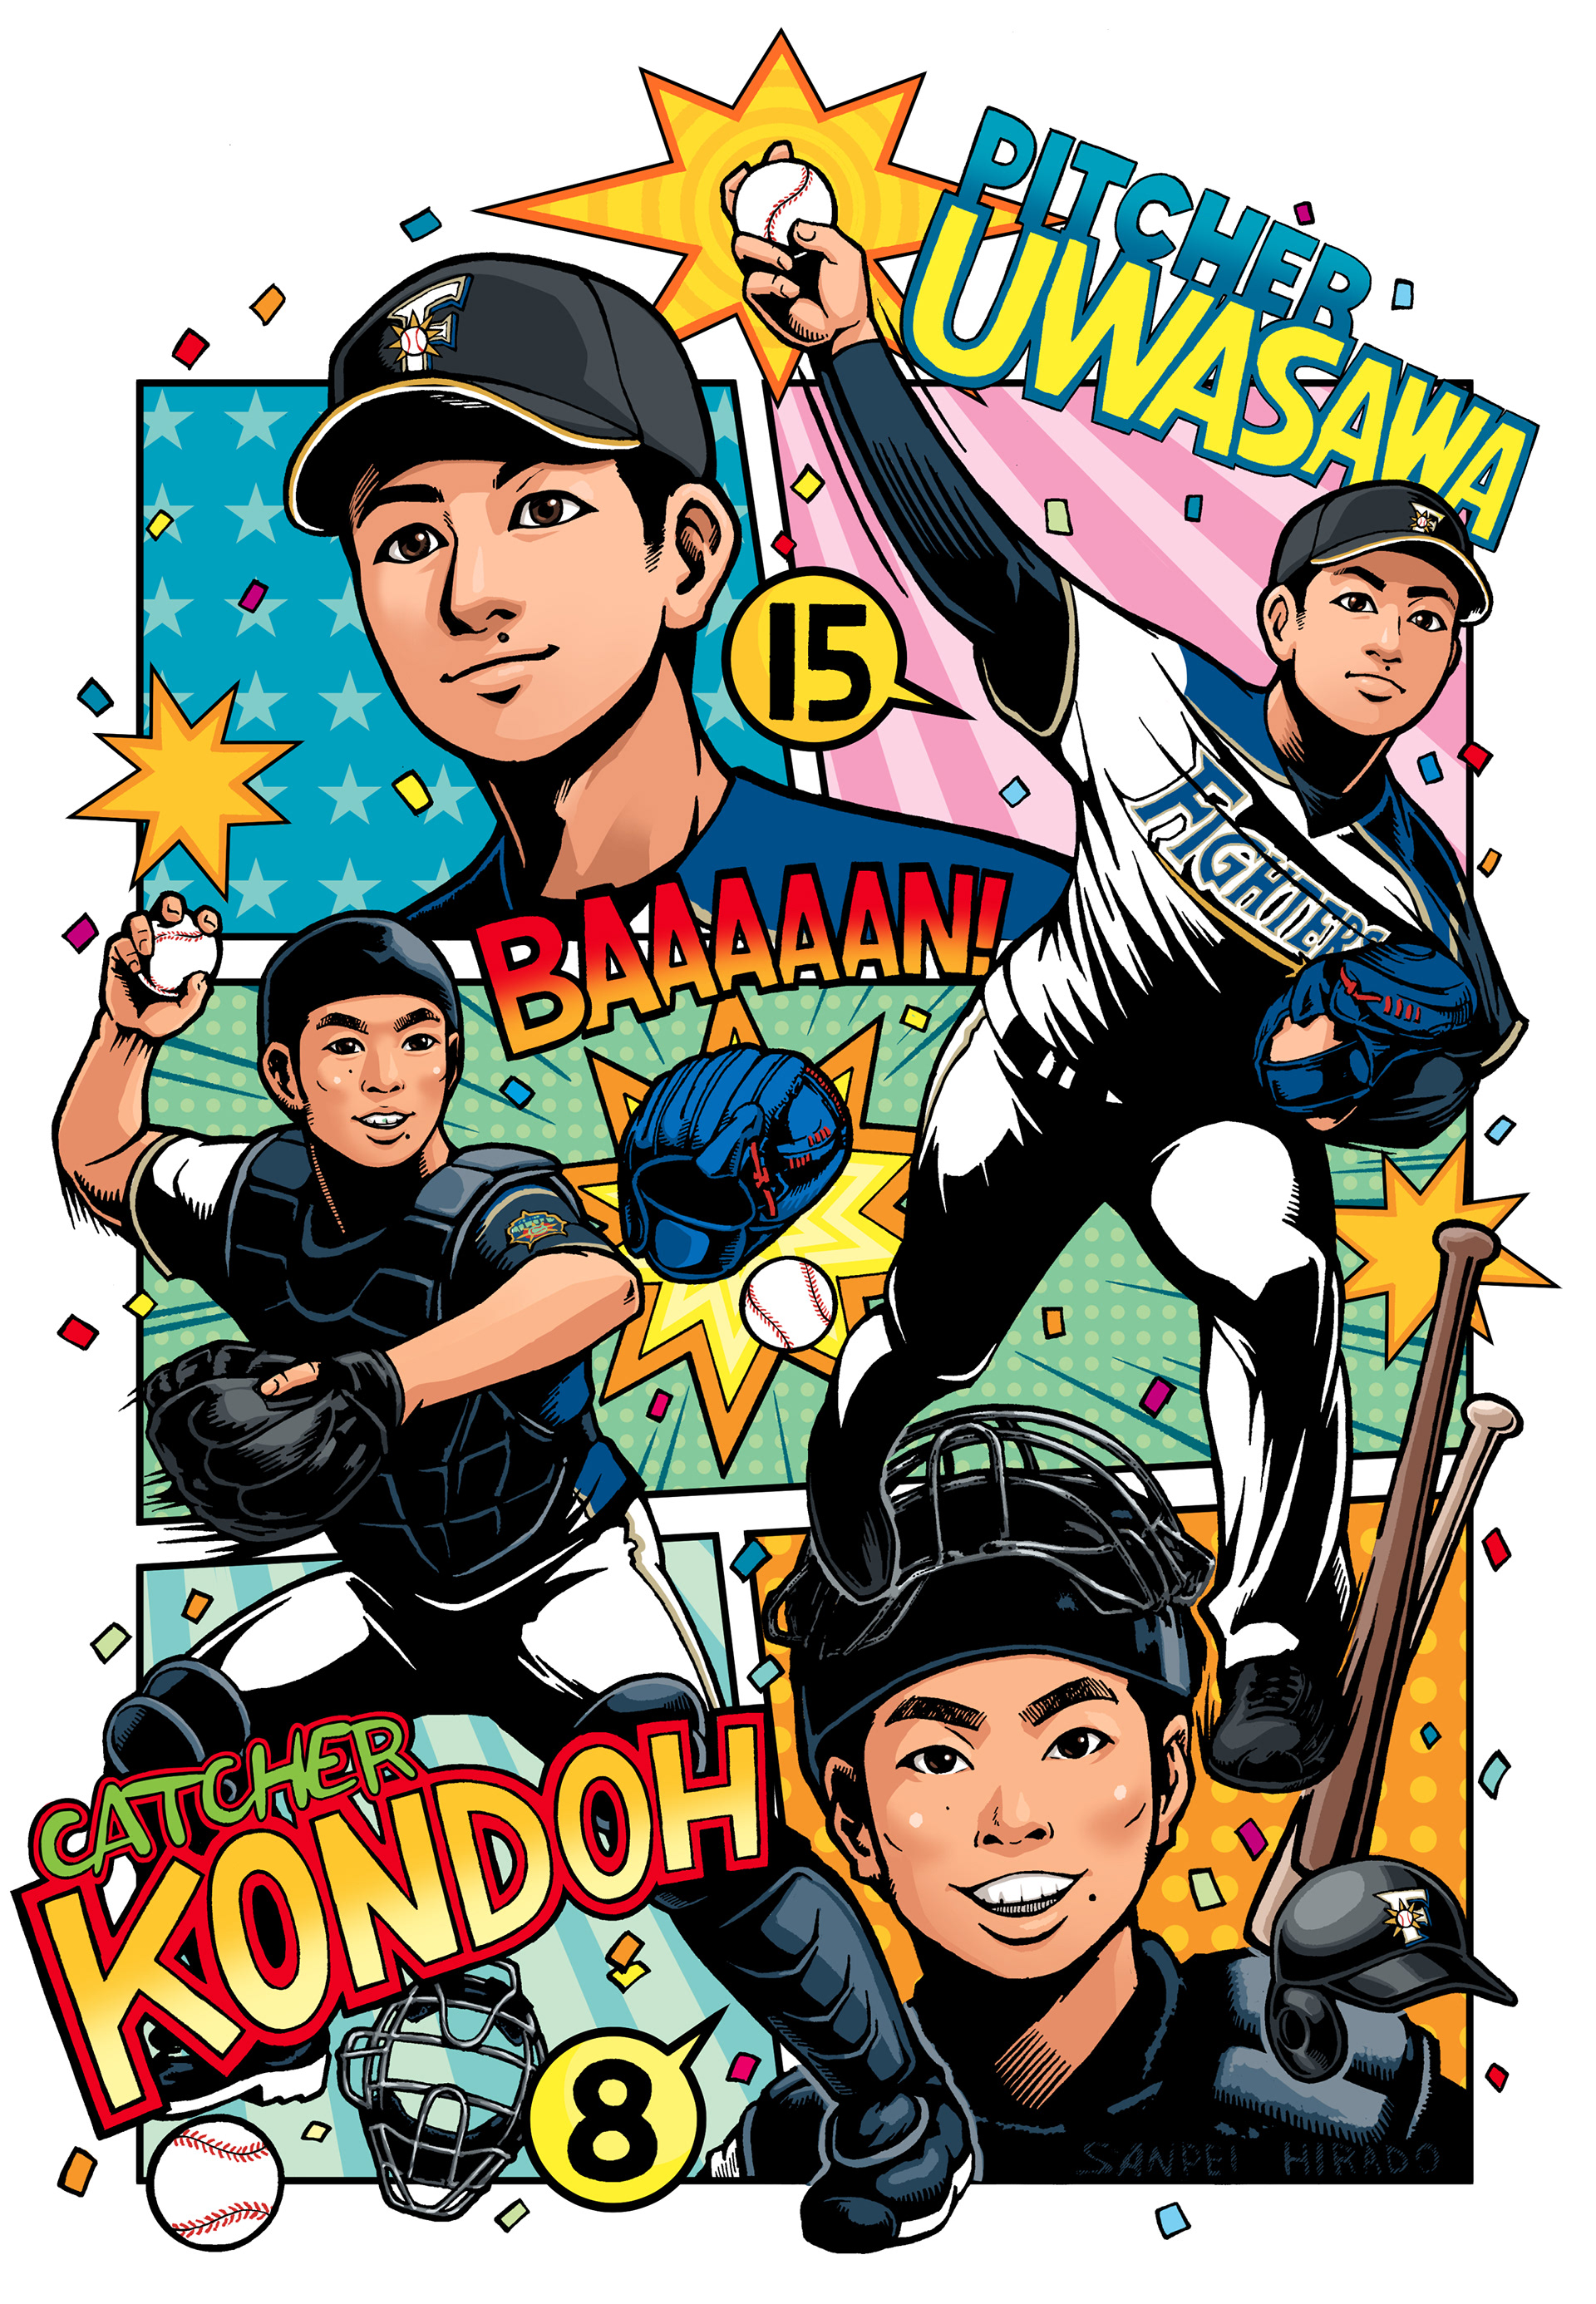 Hirado Sanpei アメコミ風イラストレーター平戸三平 Pro Baseball Player T Shirt Design 北海道日本ハムフファイターズ